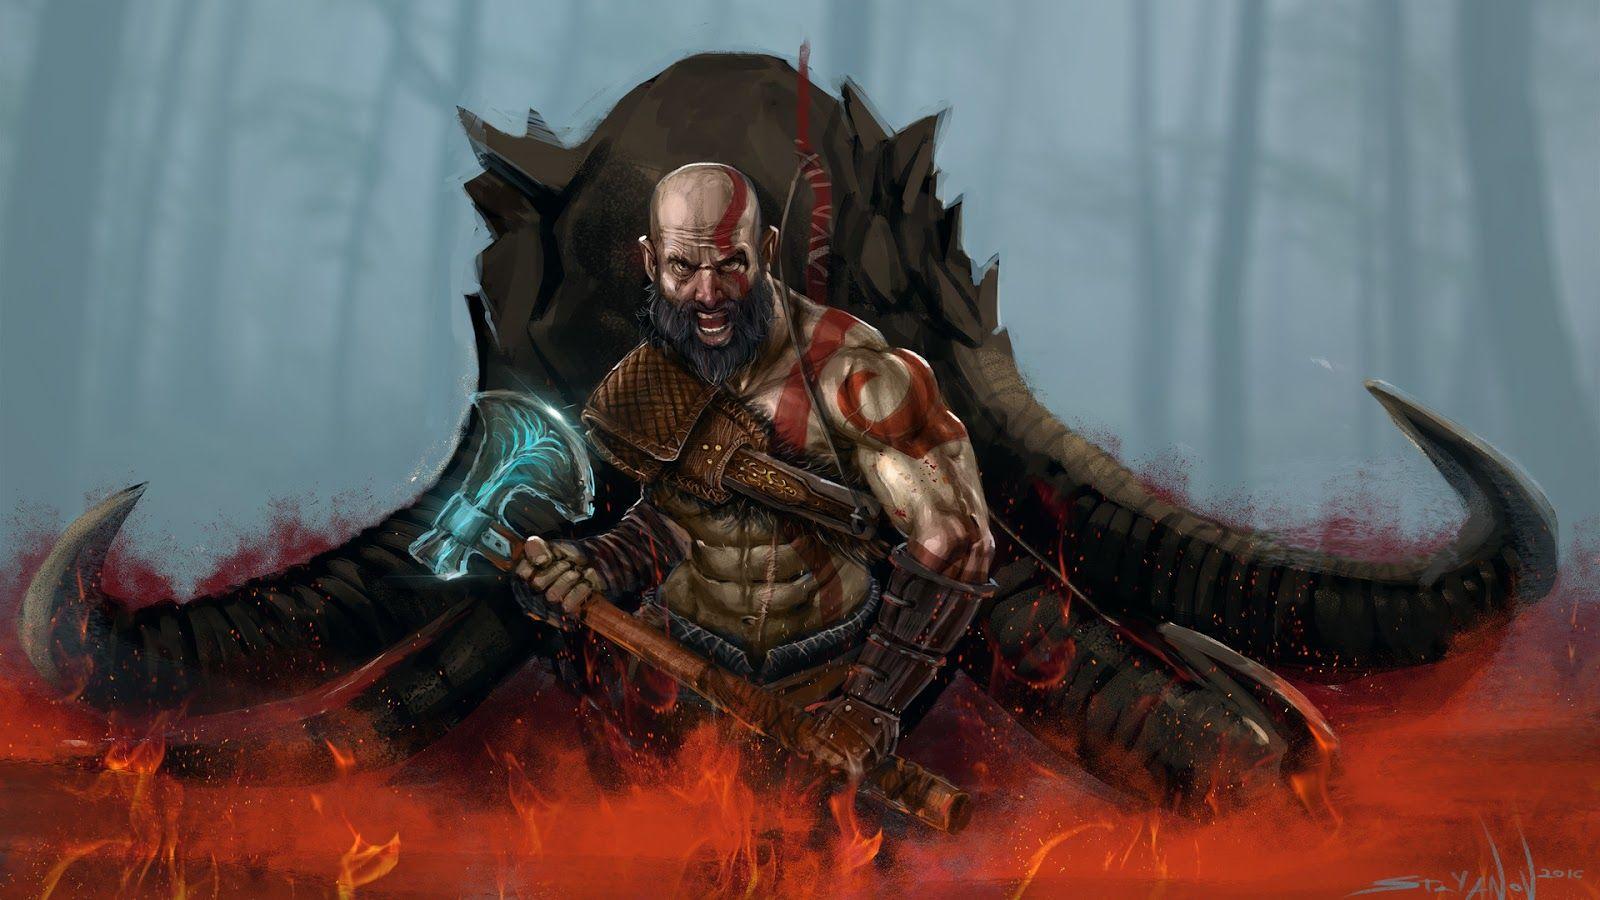 God of War IV HD Wallpaper. Read games reviews, play online